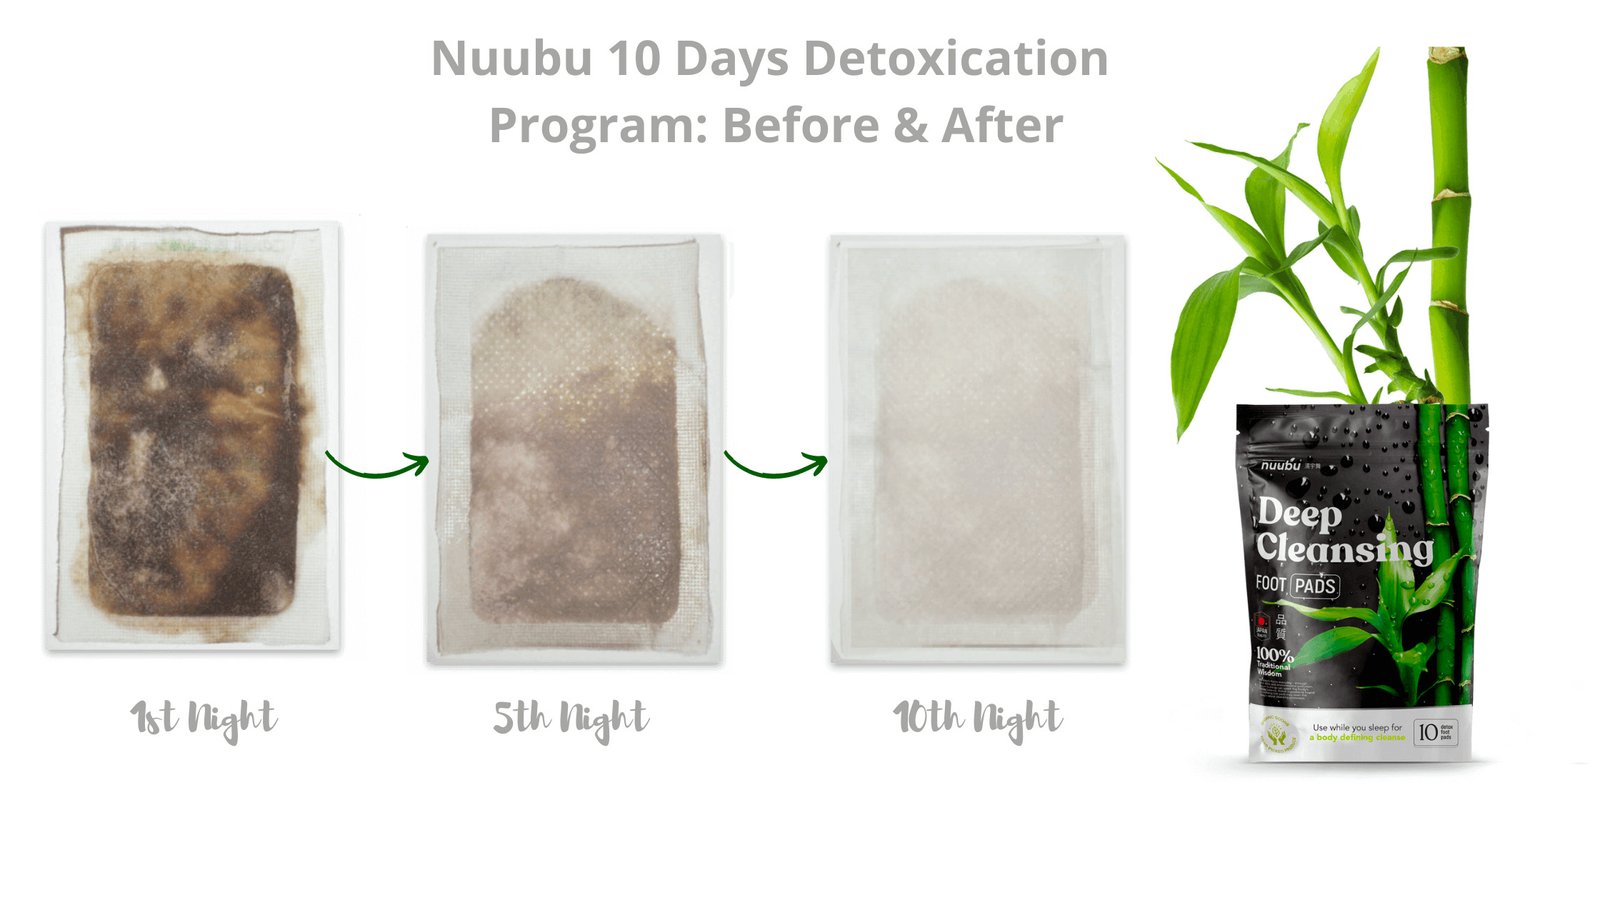 Nuubu Detoxication Program Before After